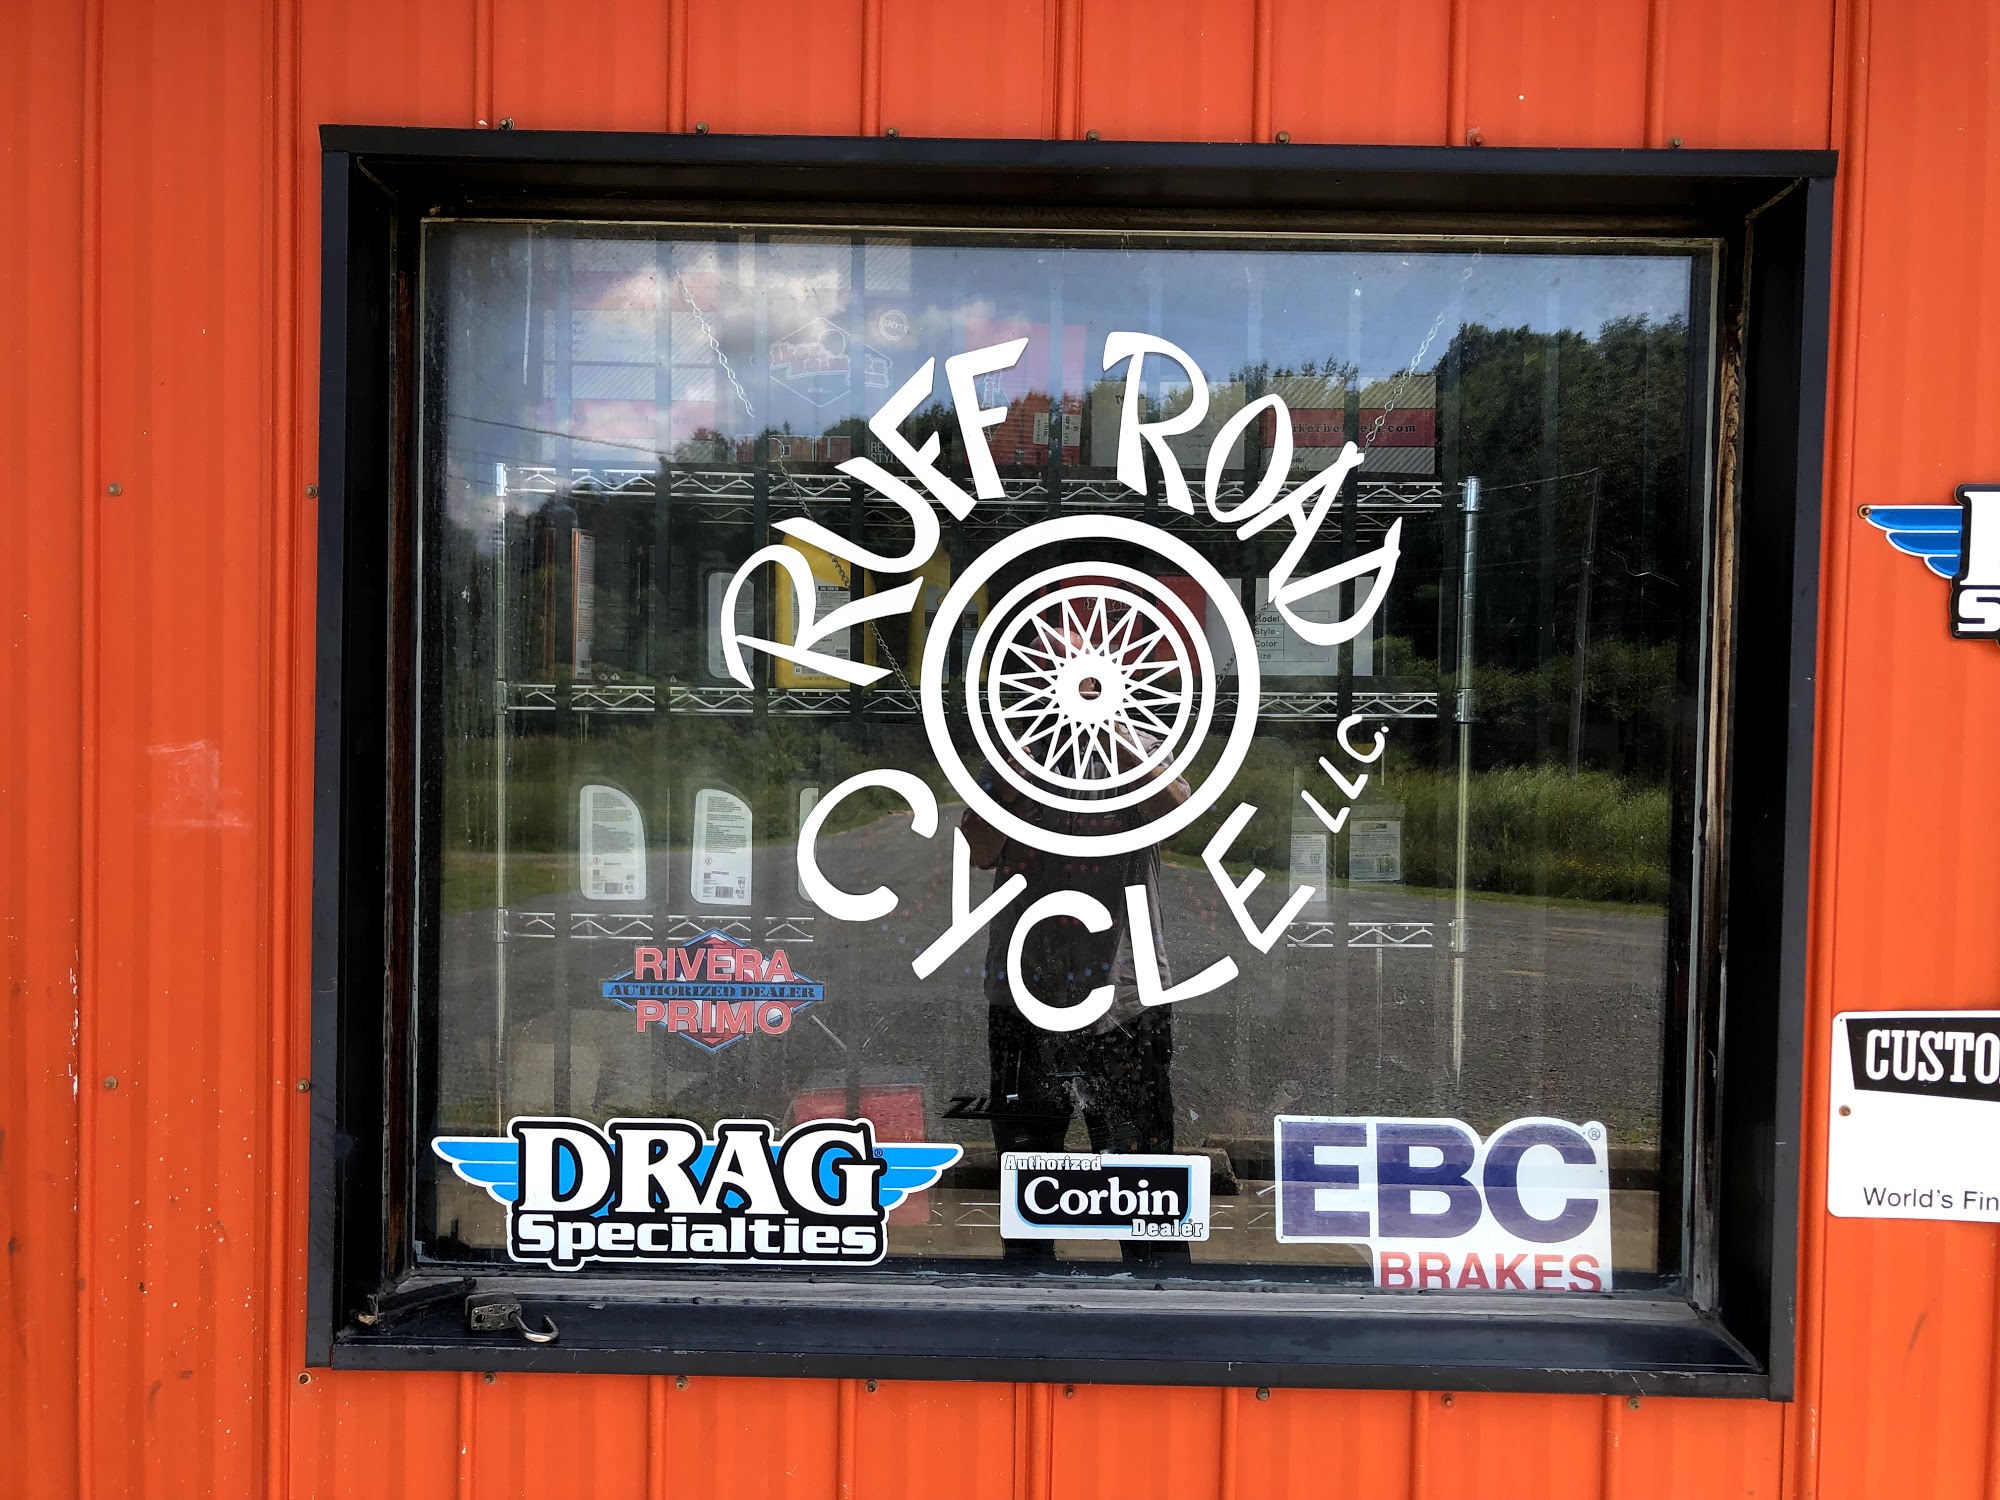 Ruff Road Cycle LLC